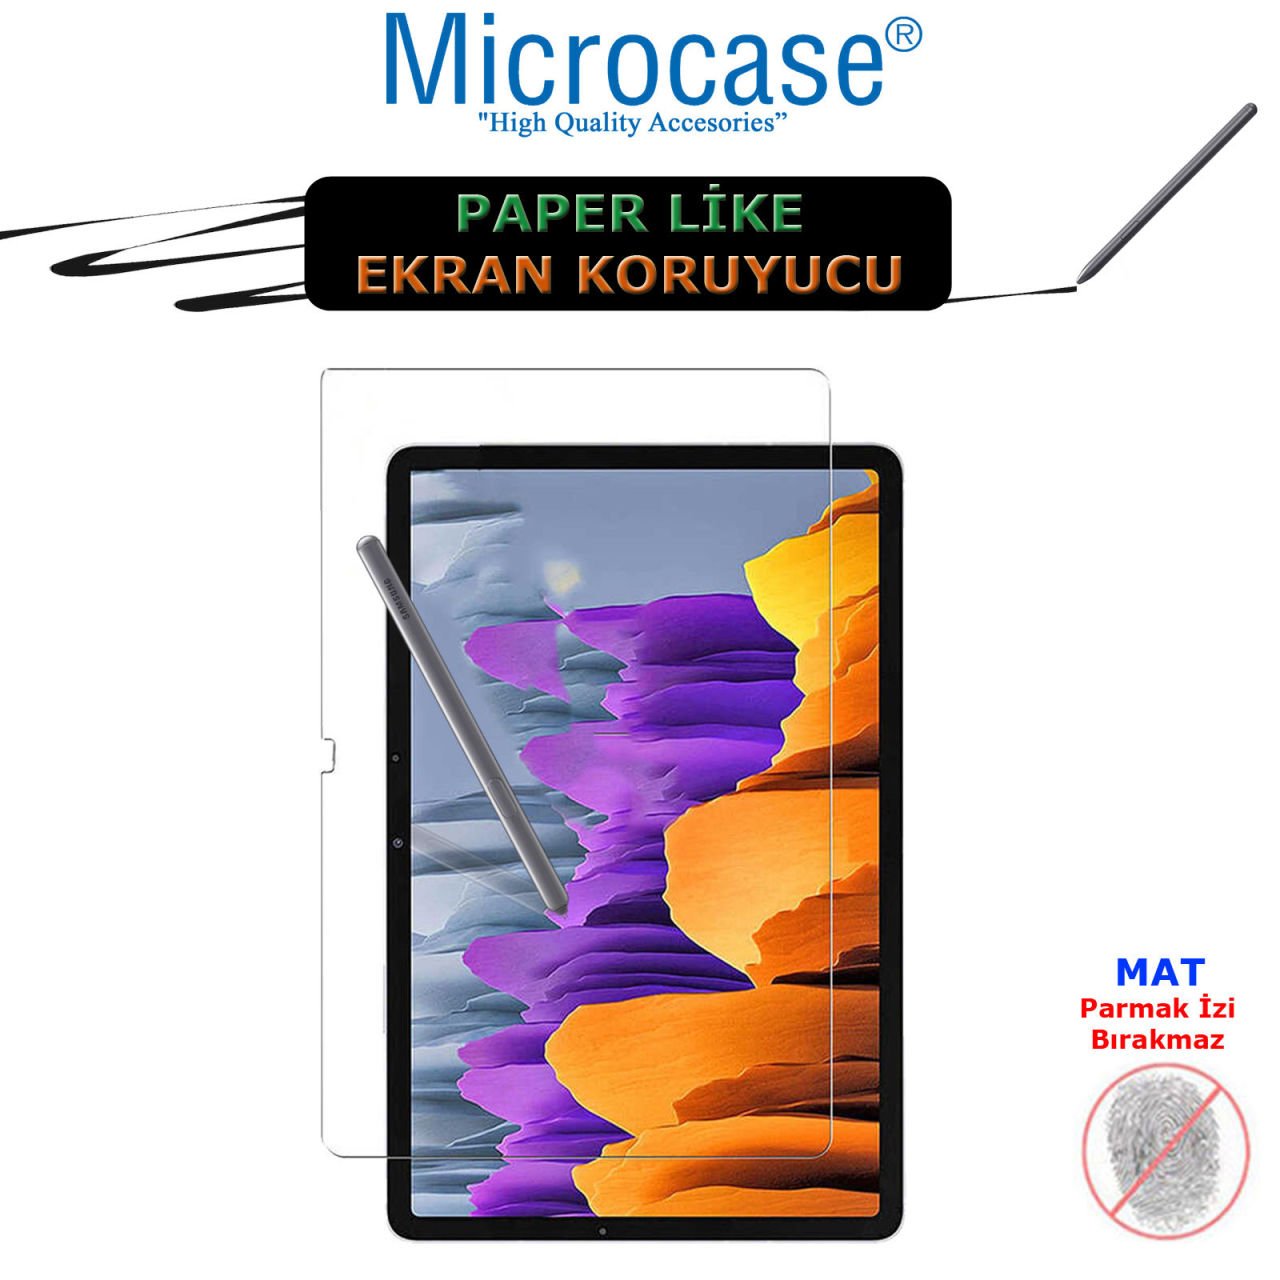 Microcase Samsung Galaxy Tab S7 T870 Paper Like Kağıt Hissi Veren MAT Ekran Koruyucu